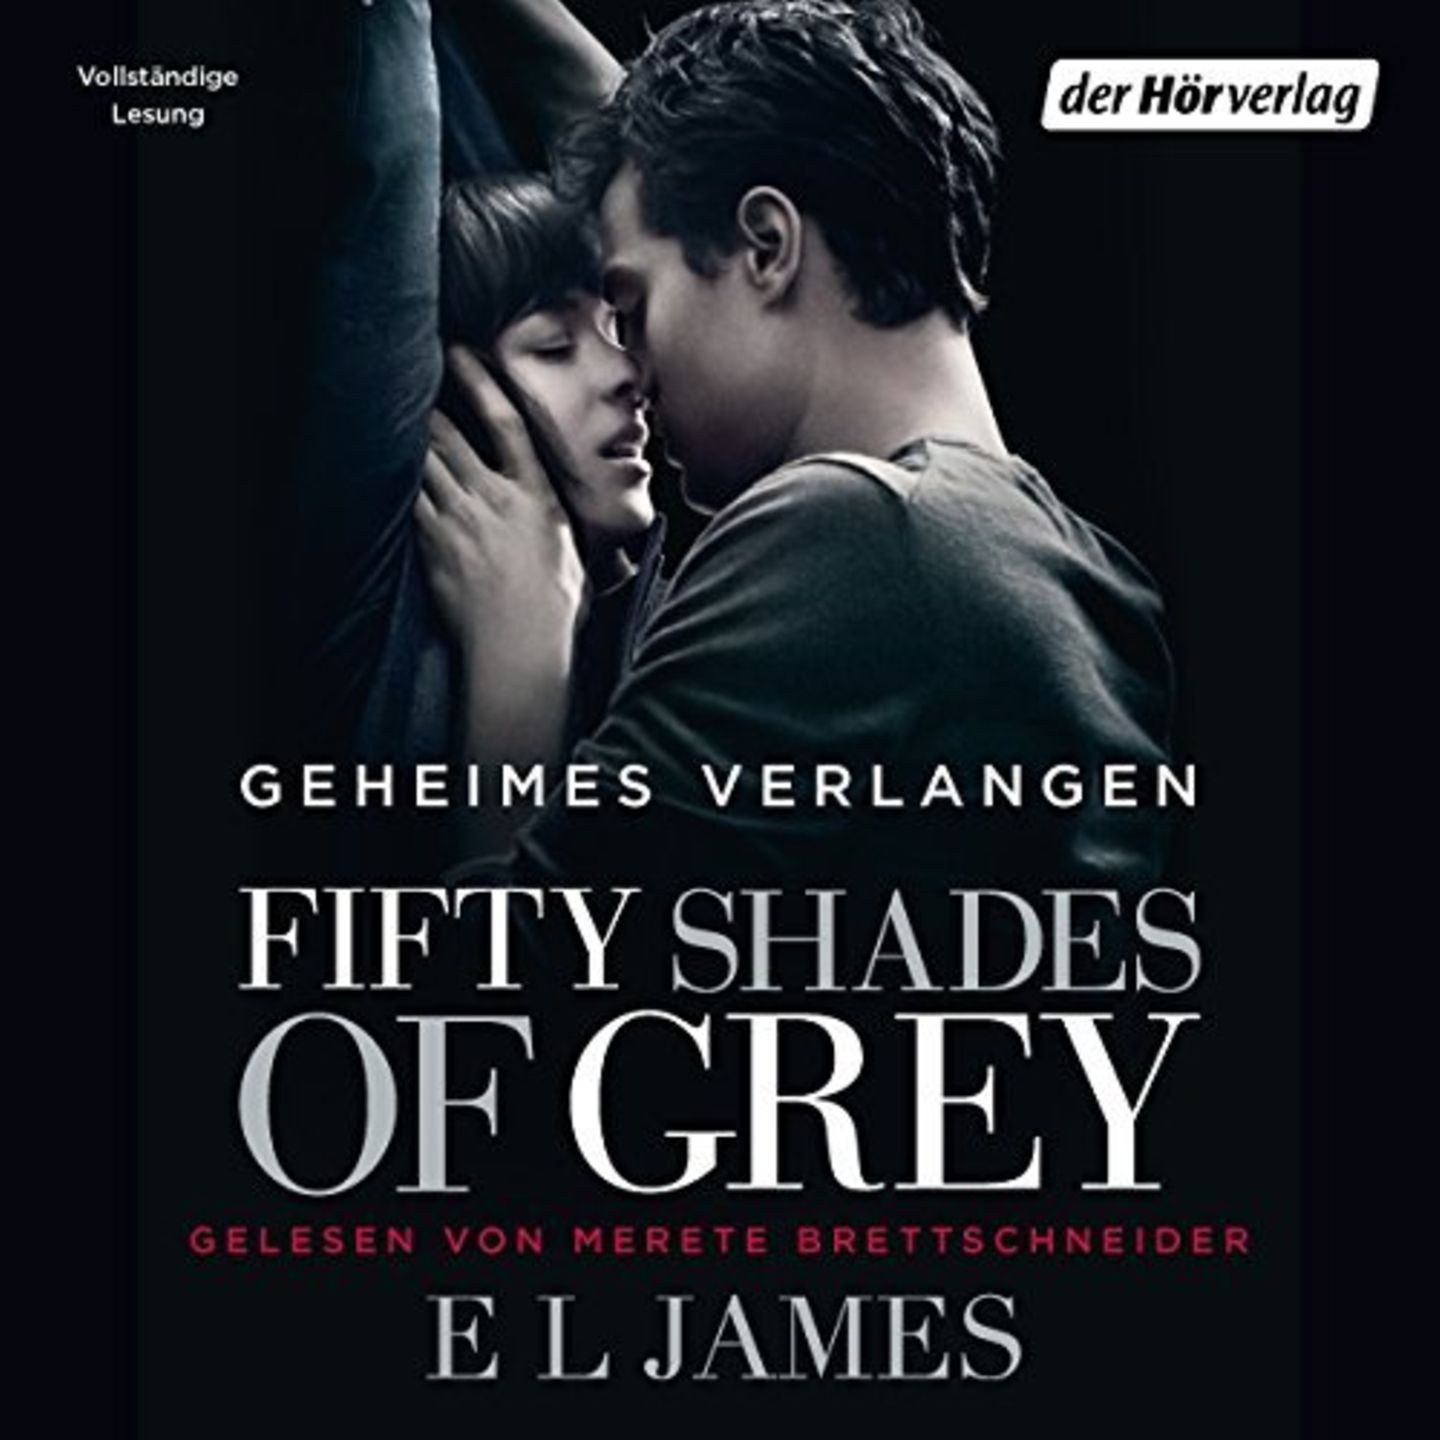 "Fifty Shades of Grey" von E. L. James